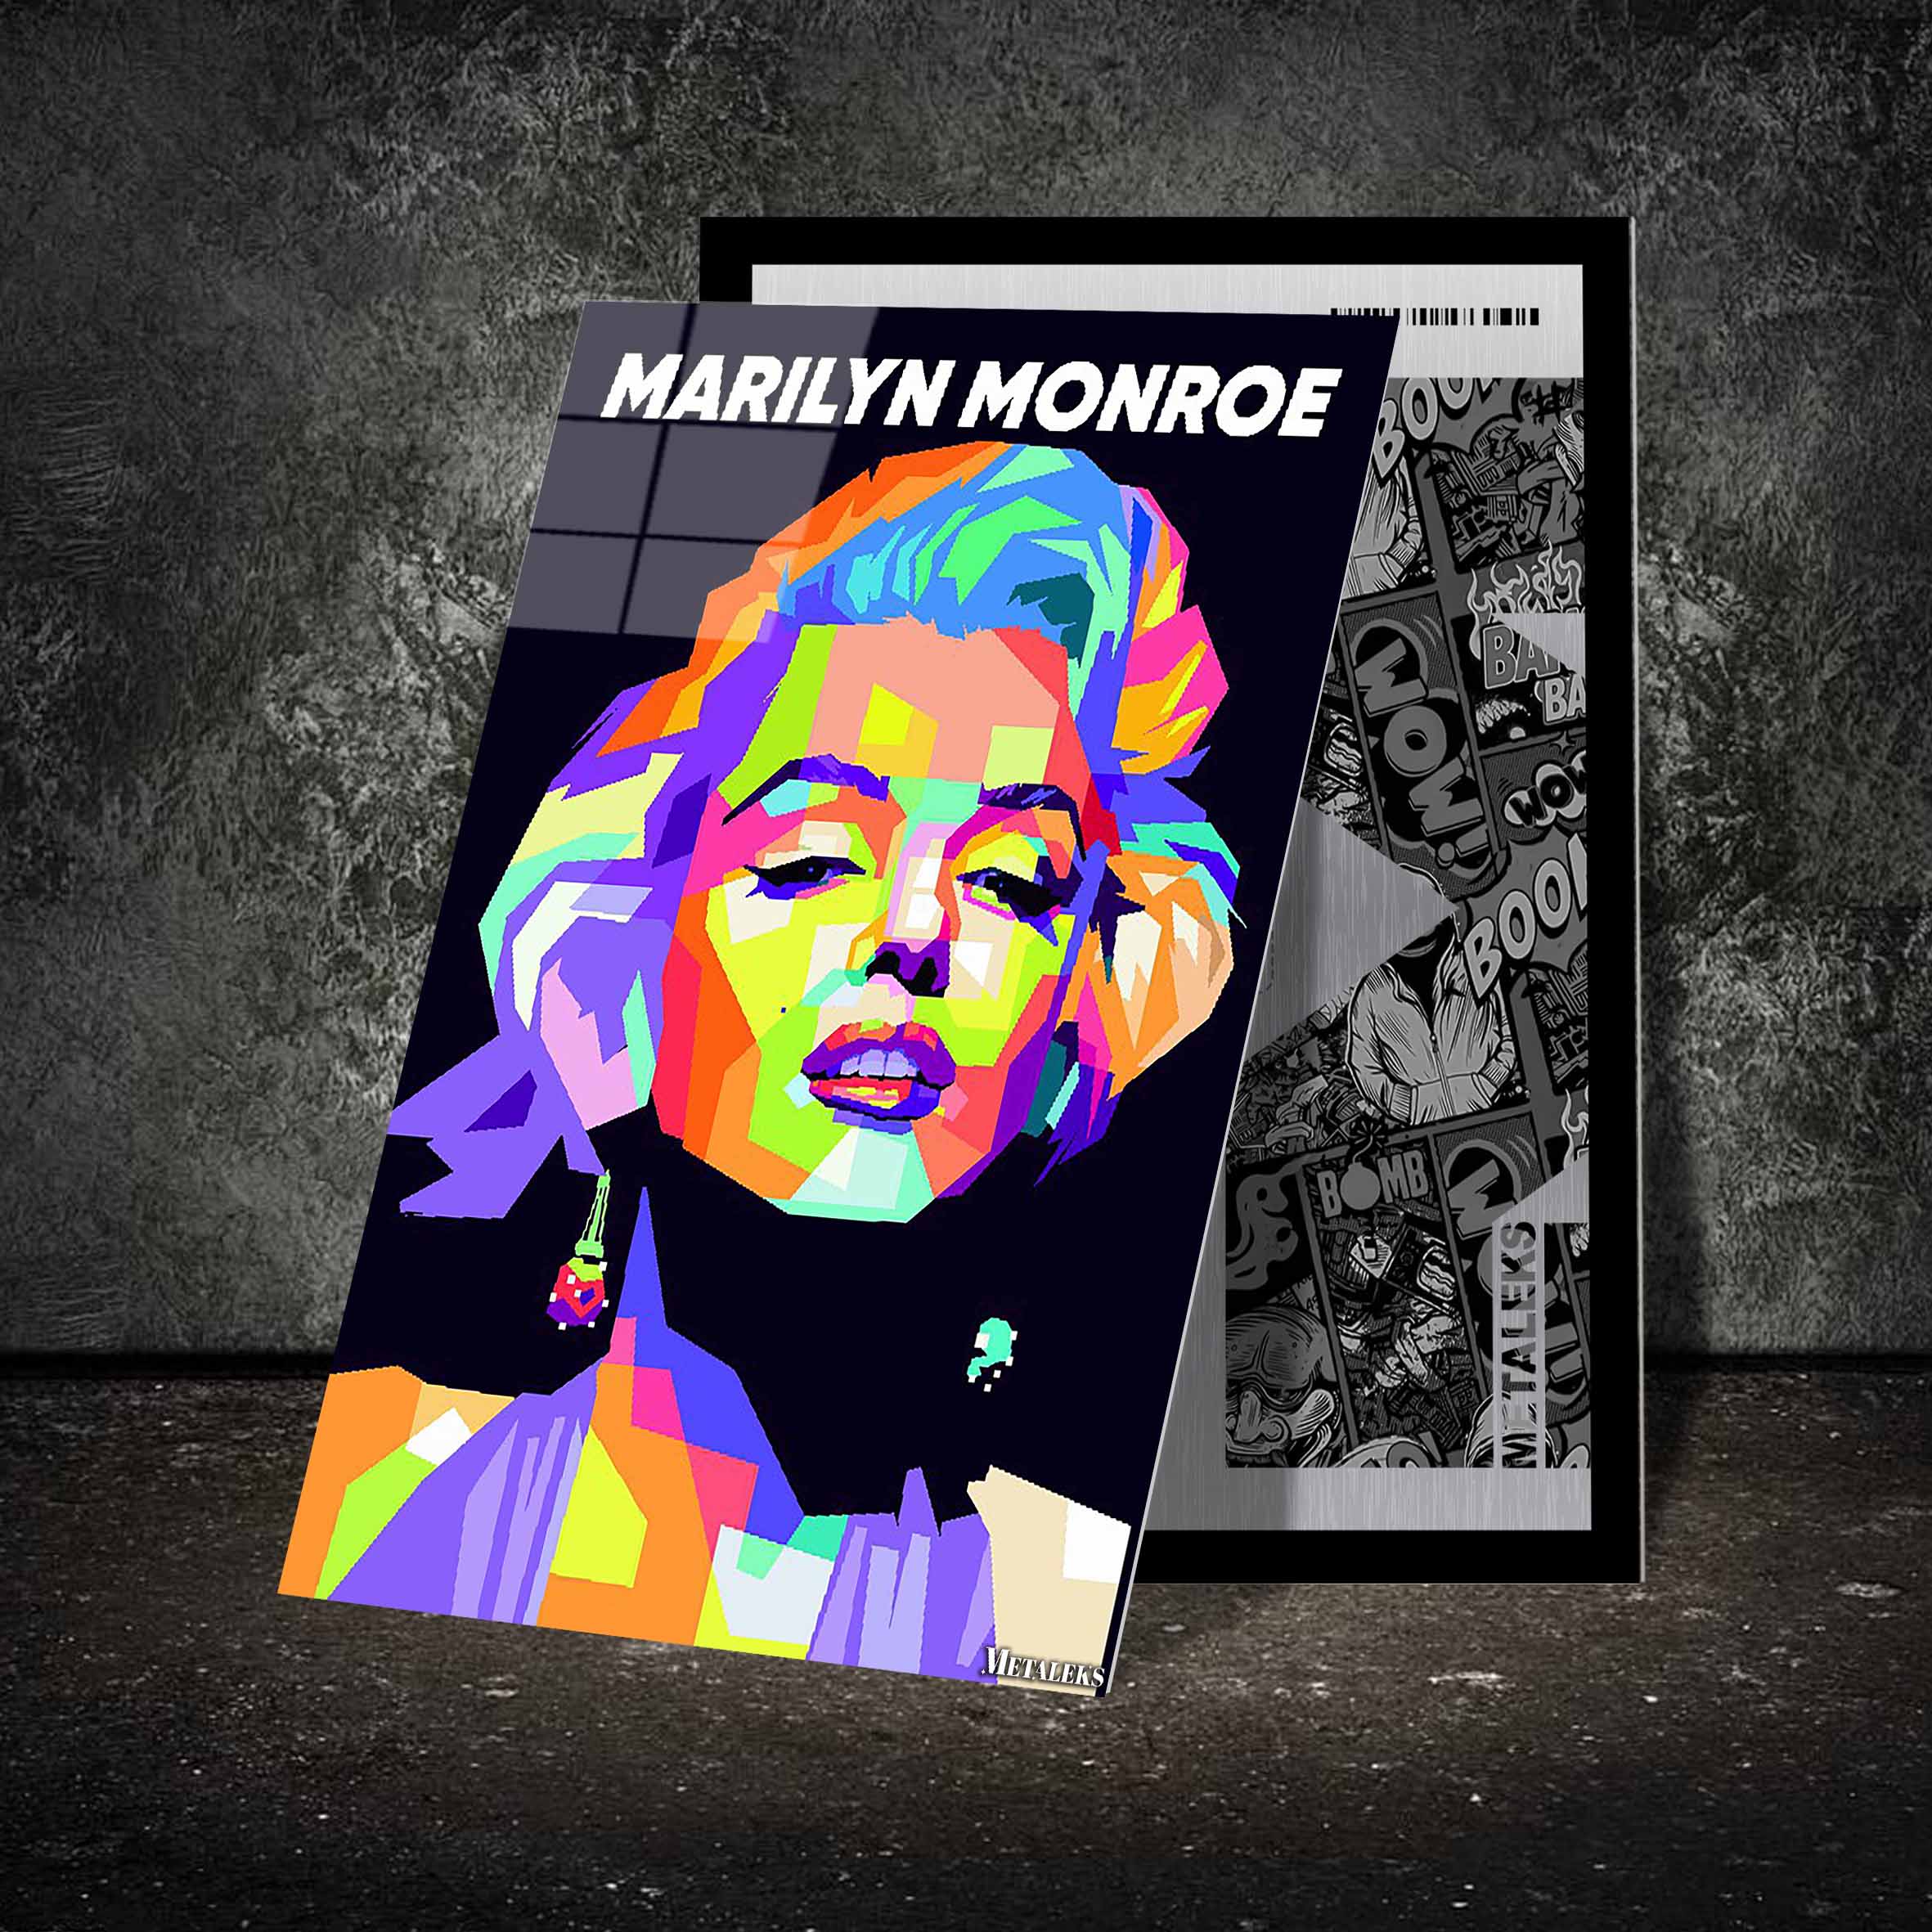 Monroe-designed by @martincreative